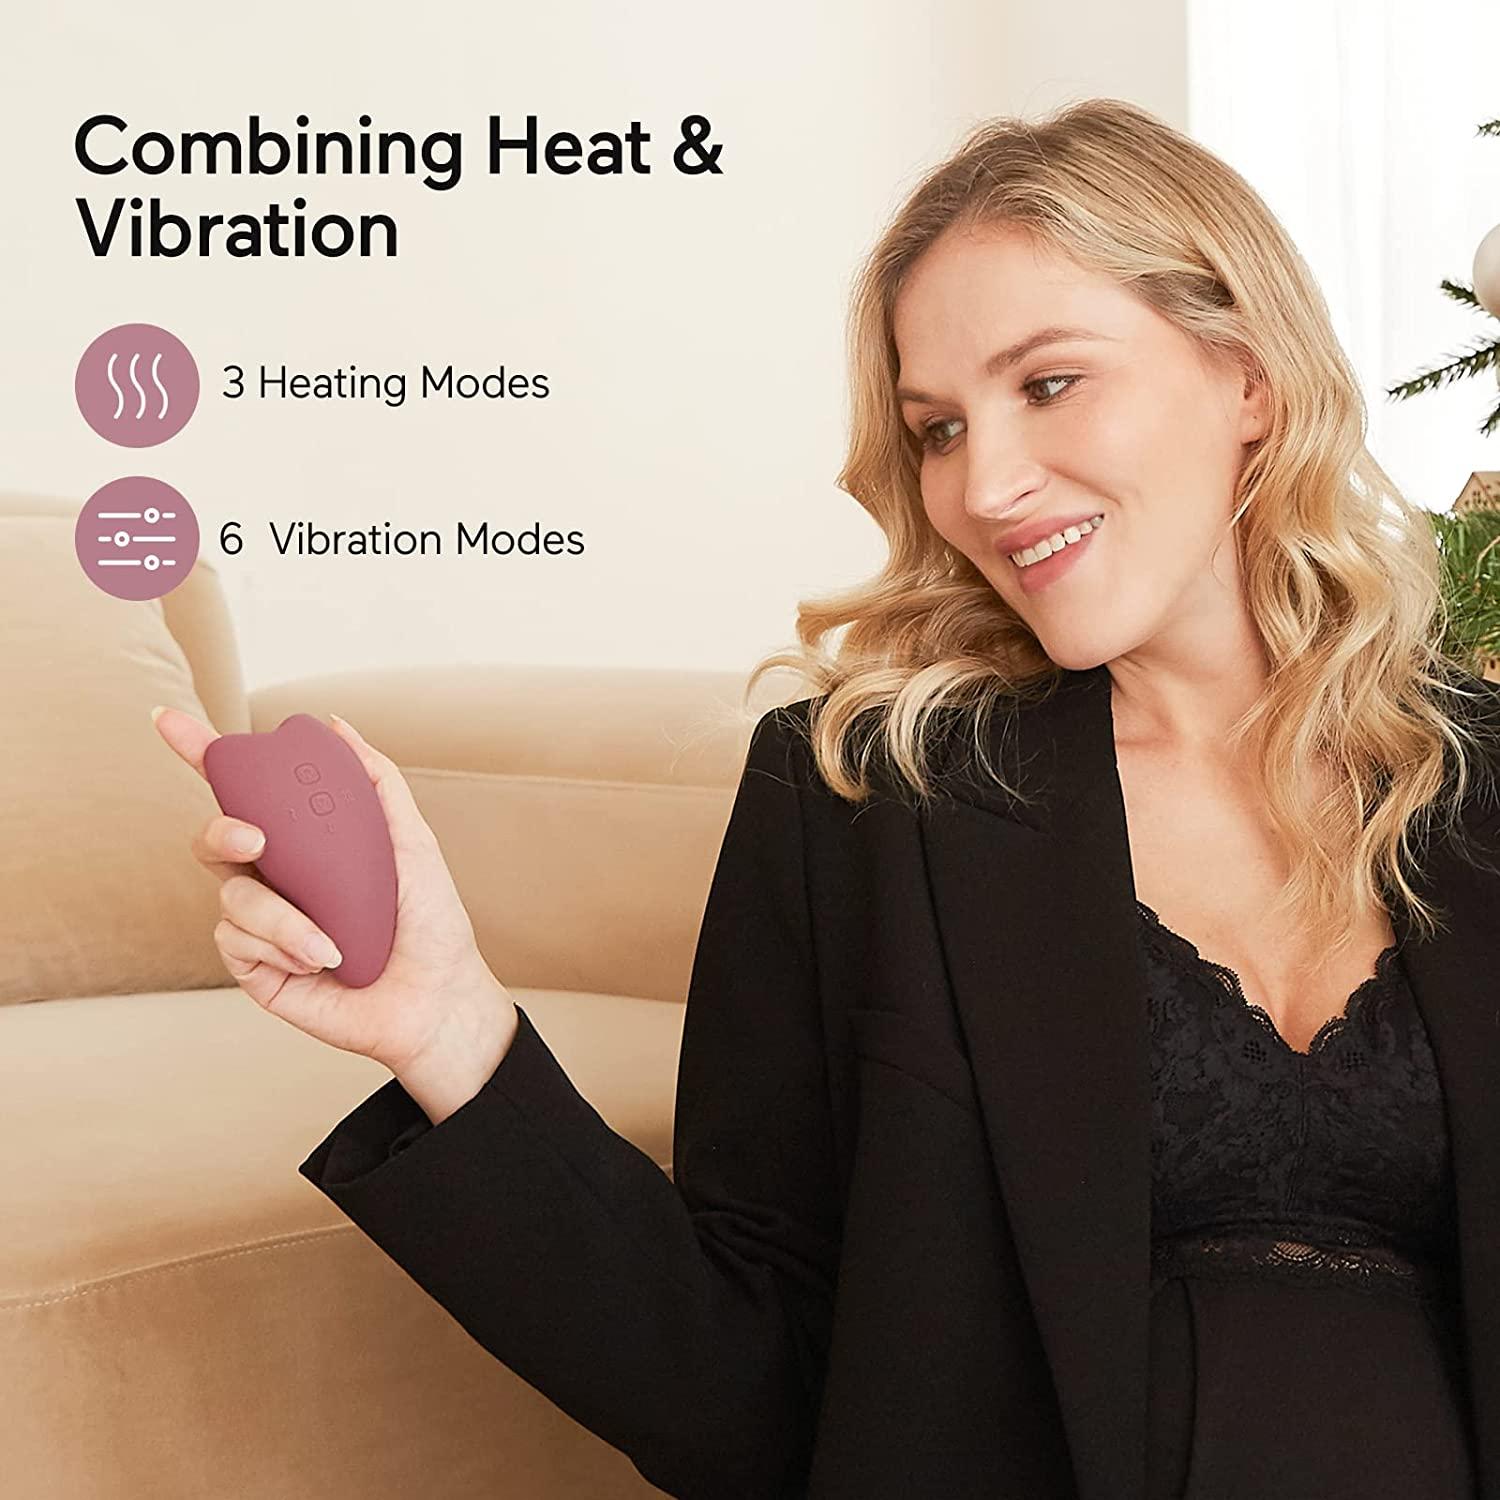 Warming & Vibrating Lactation Massager: Boost Breast Health